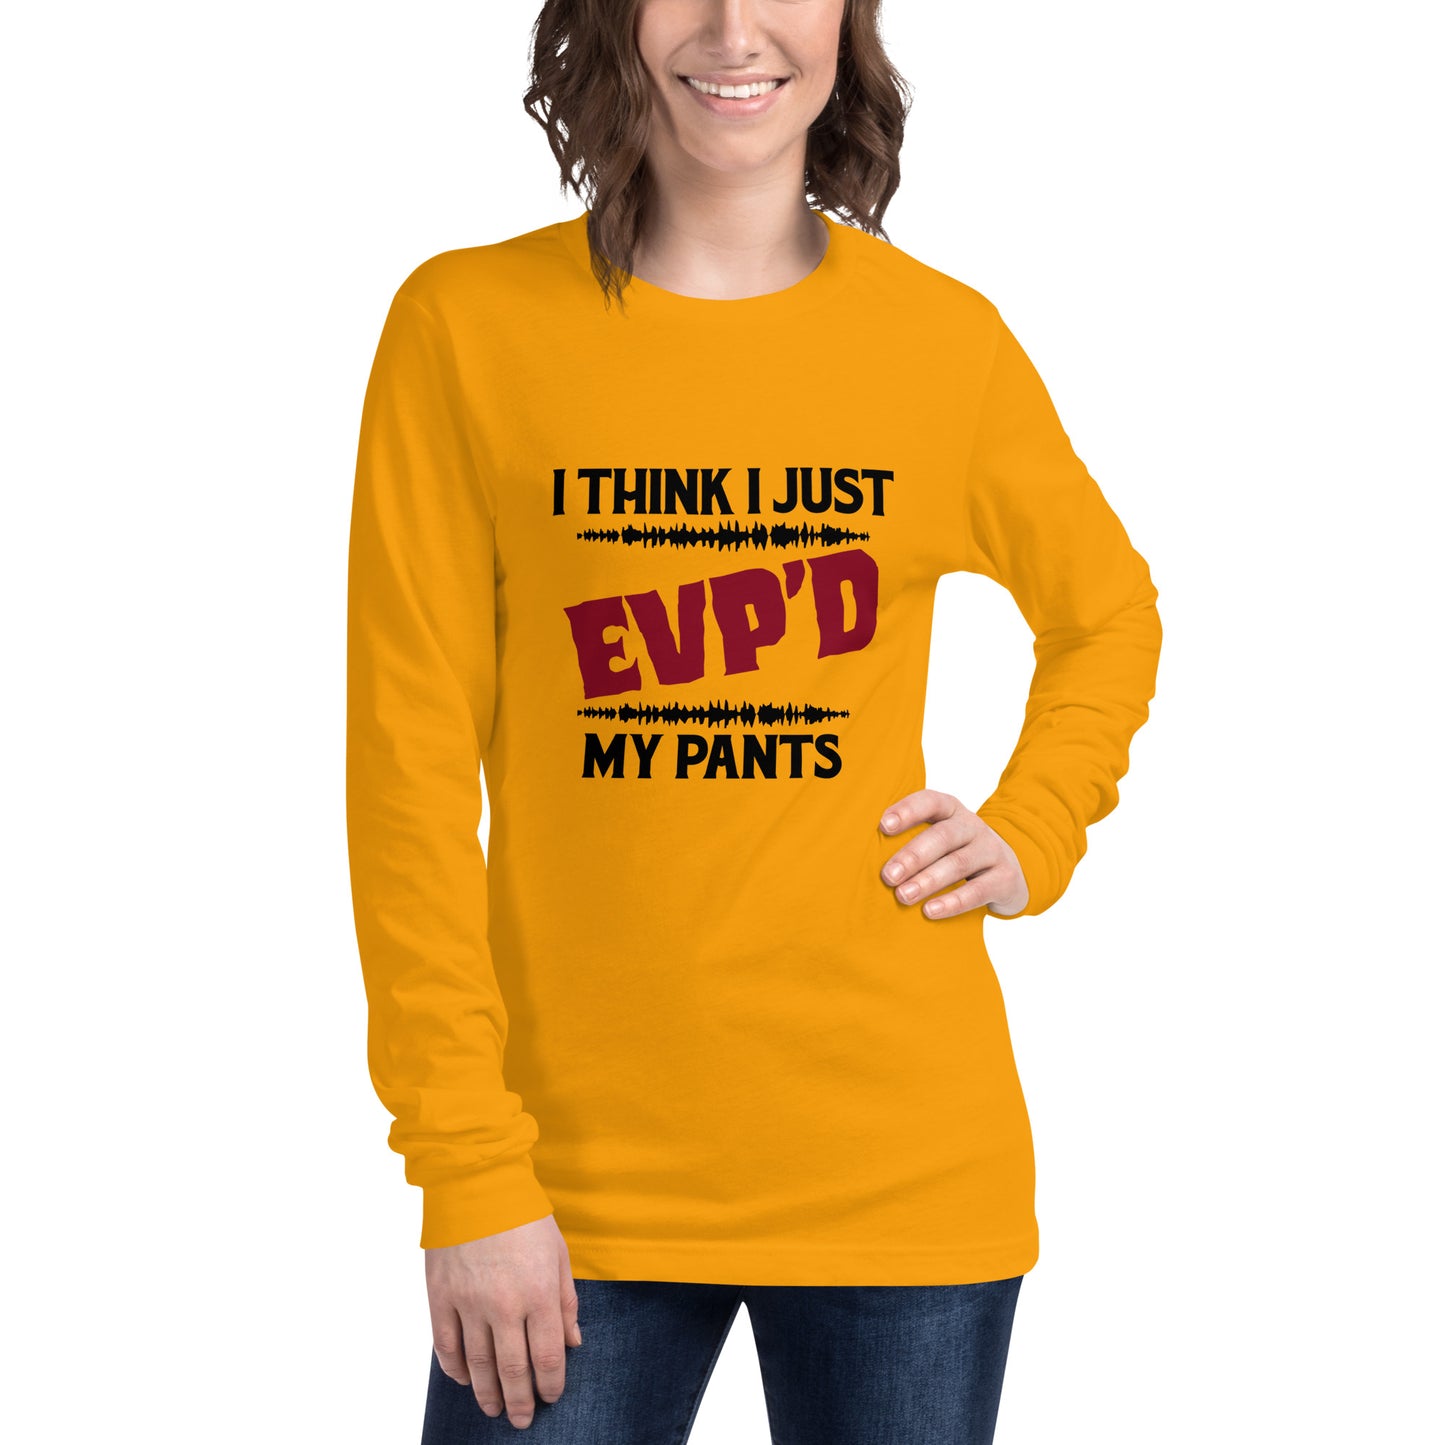 "I Think I Just EVP'd My Pants" / Unisex Long Sleeve Tee